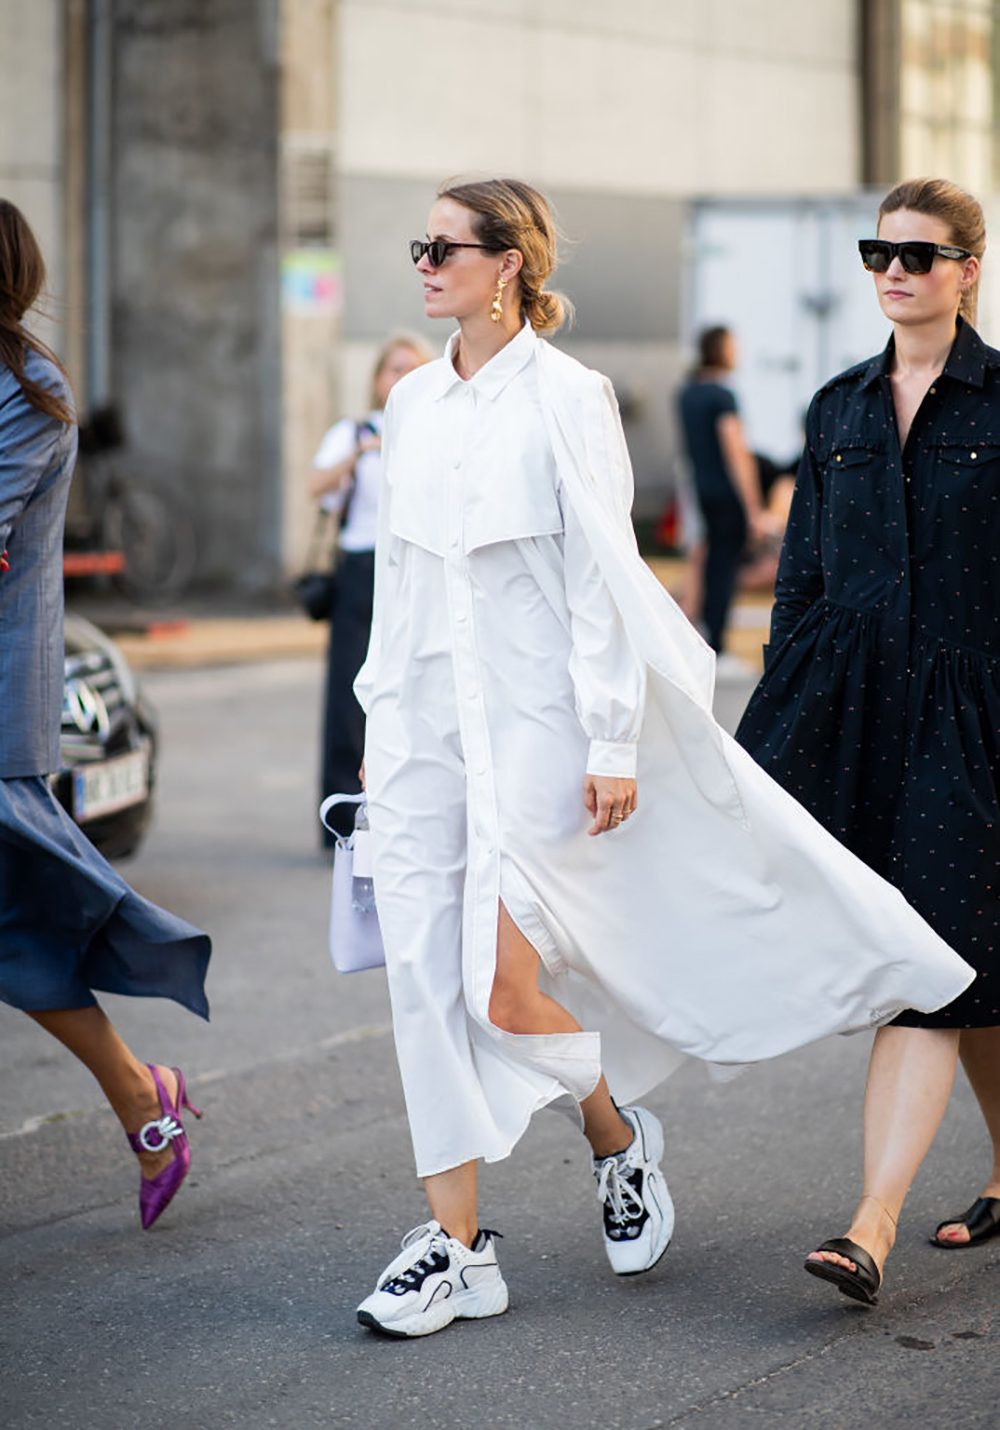 COPENHAGEN, DENMARK - AUGUST 09: A guest wearing white dress is seen outside Ganni during the Copenhagen Fashion Week Spring/Summer 2019 on August 9, 2018 in Copenhagen, Denmark. (Photo by Christian Vierig/Getty Images)